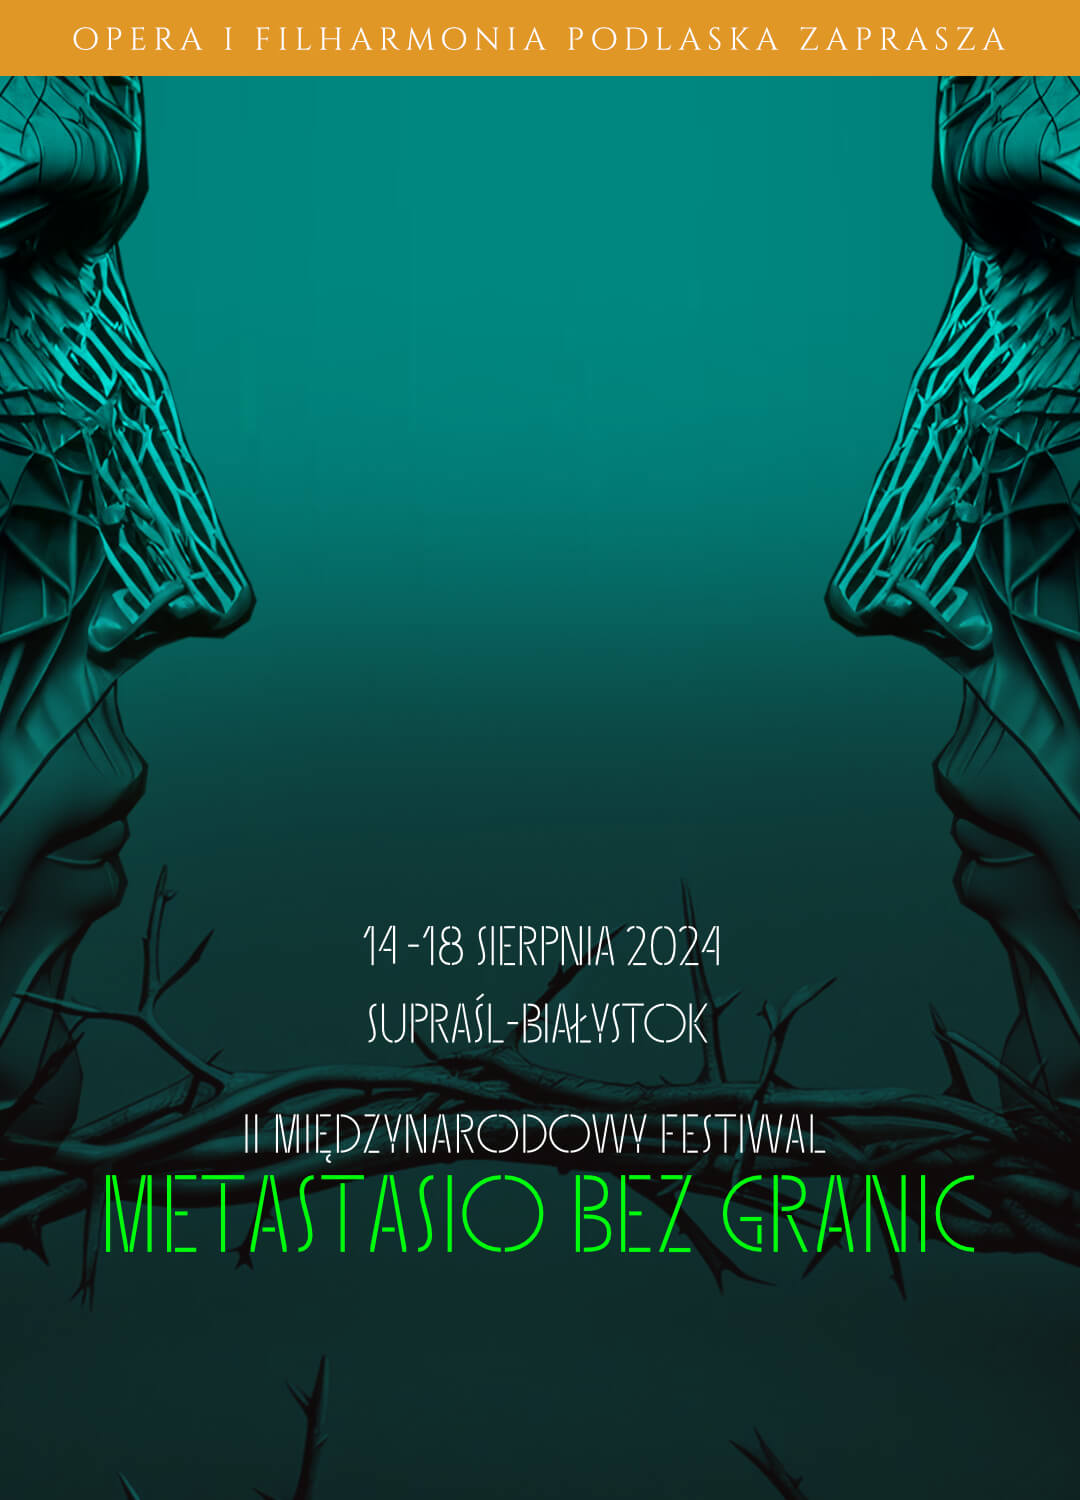 METASTASIO NEZ GRANIC - OIFP